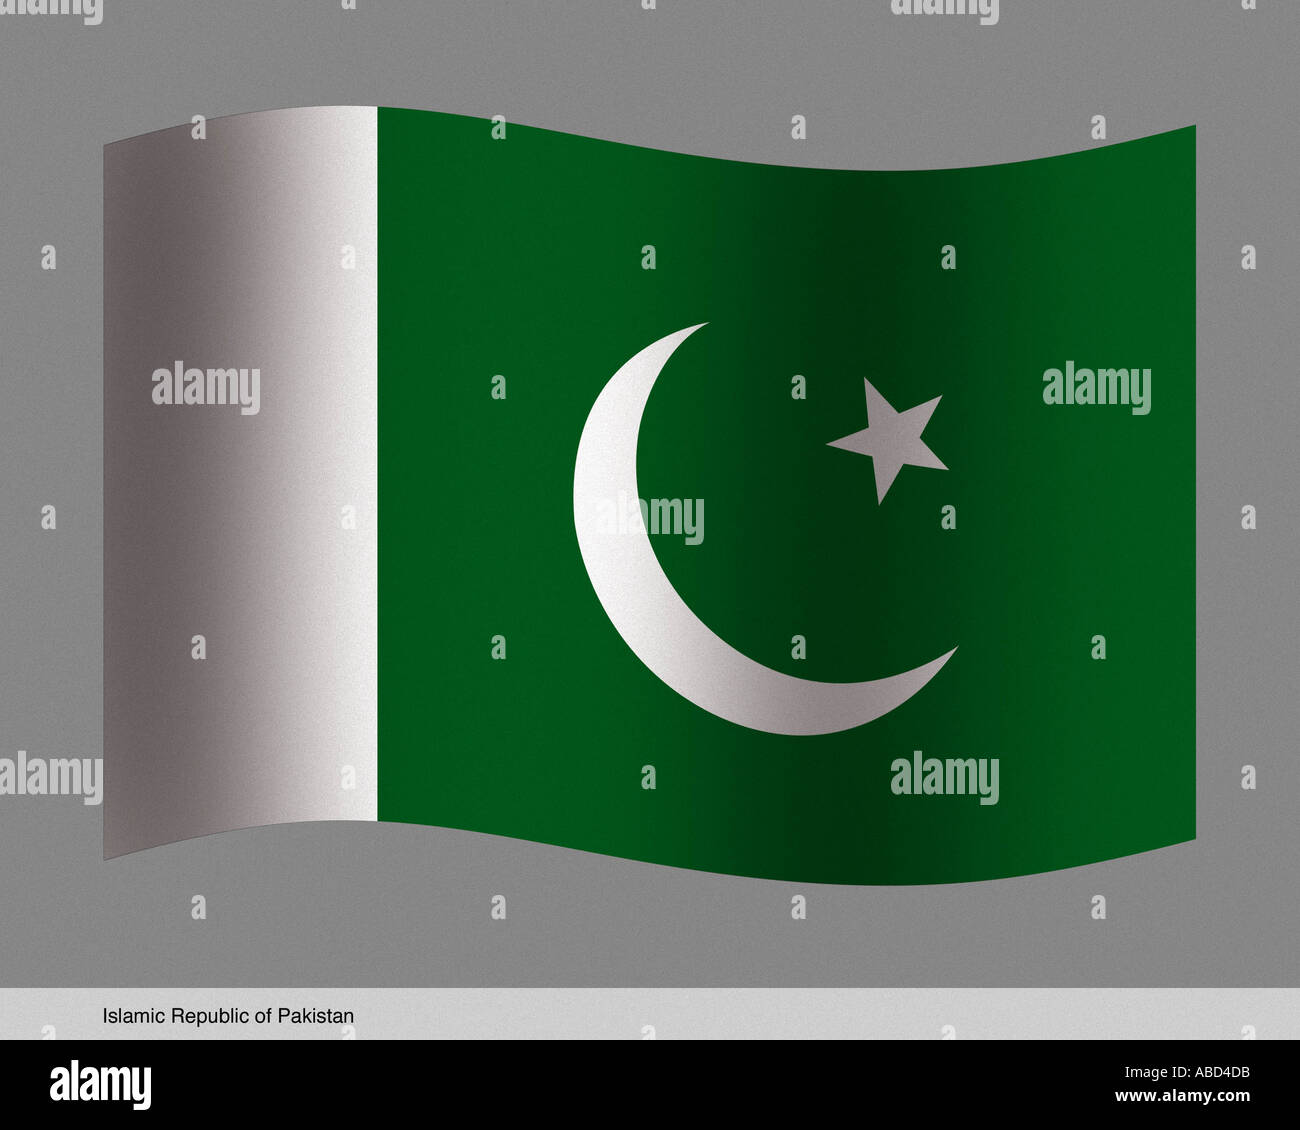 Islamic Republic of Pakistan Stock Photo